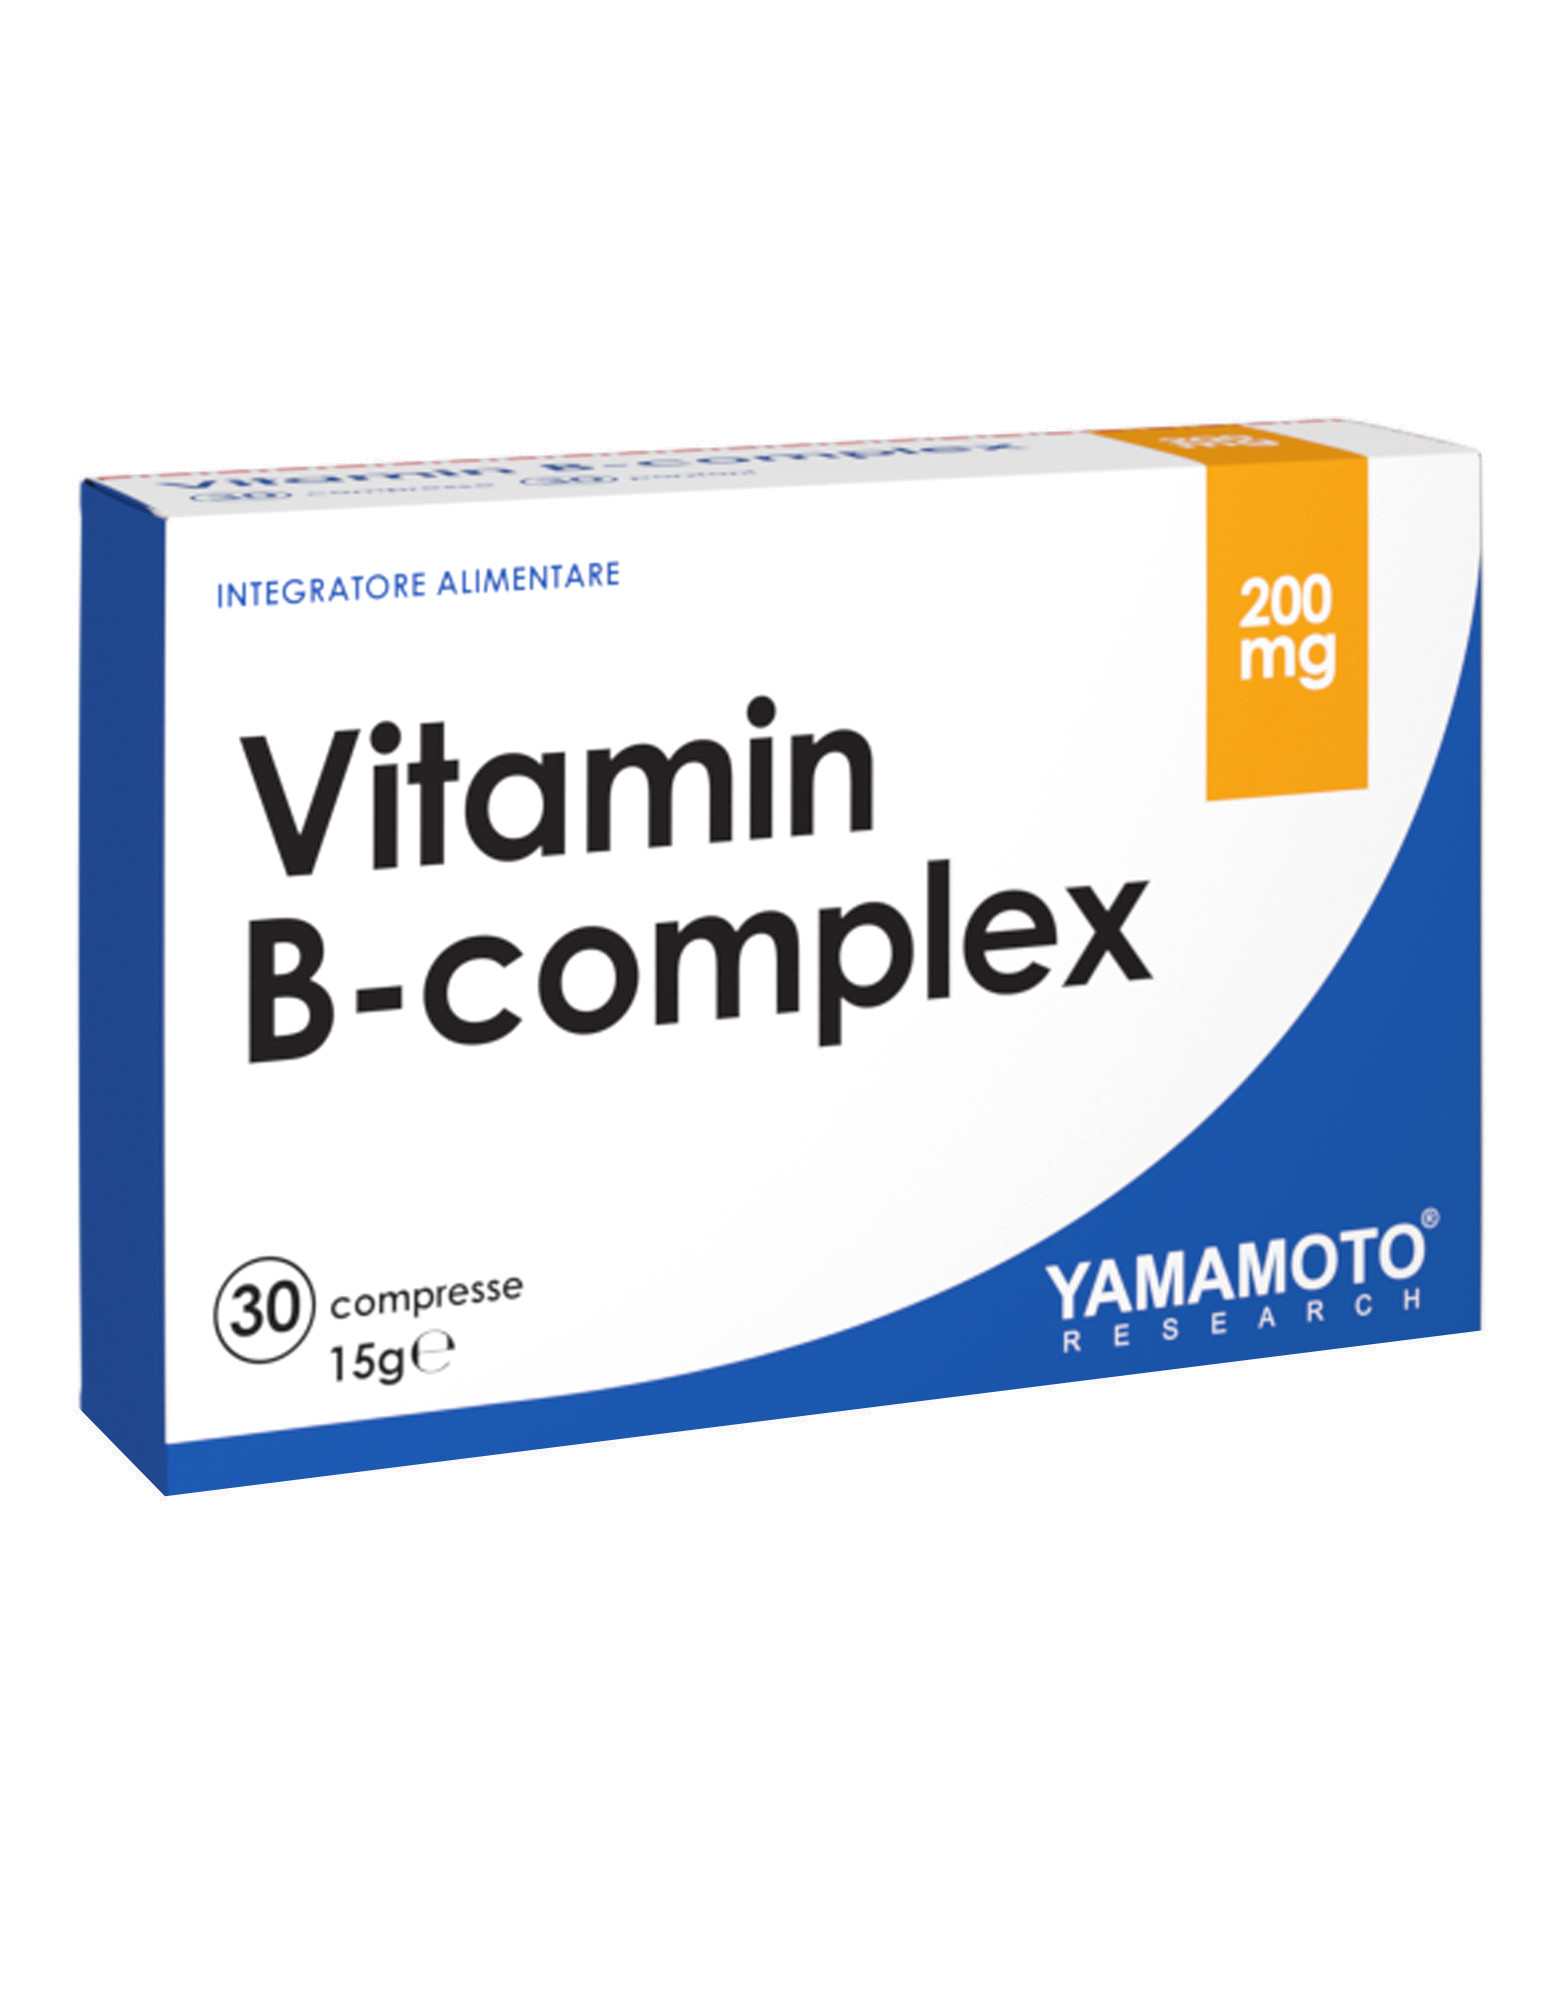 ik ben ziek blouse speling Vitamin B-Complex by Yamamoto research, 30 tablets - iafstore.com